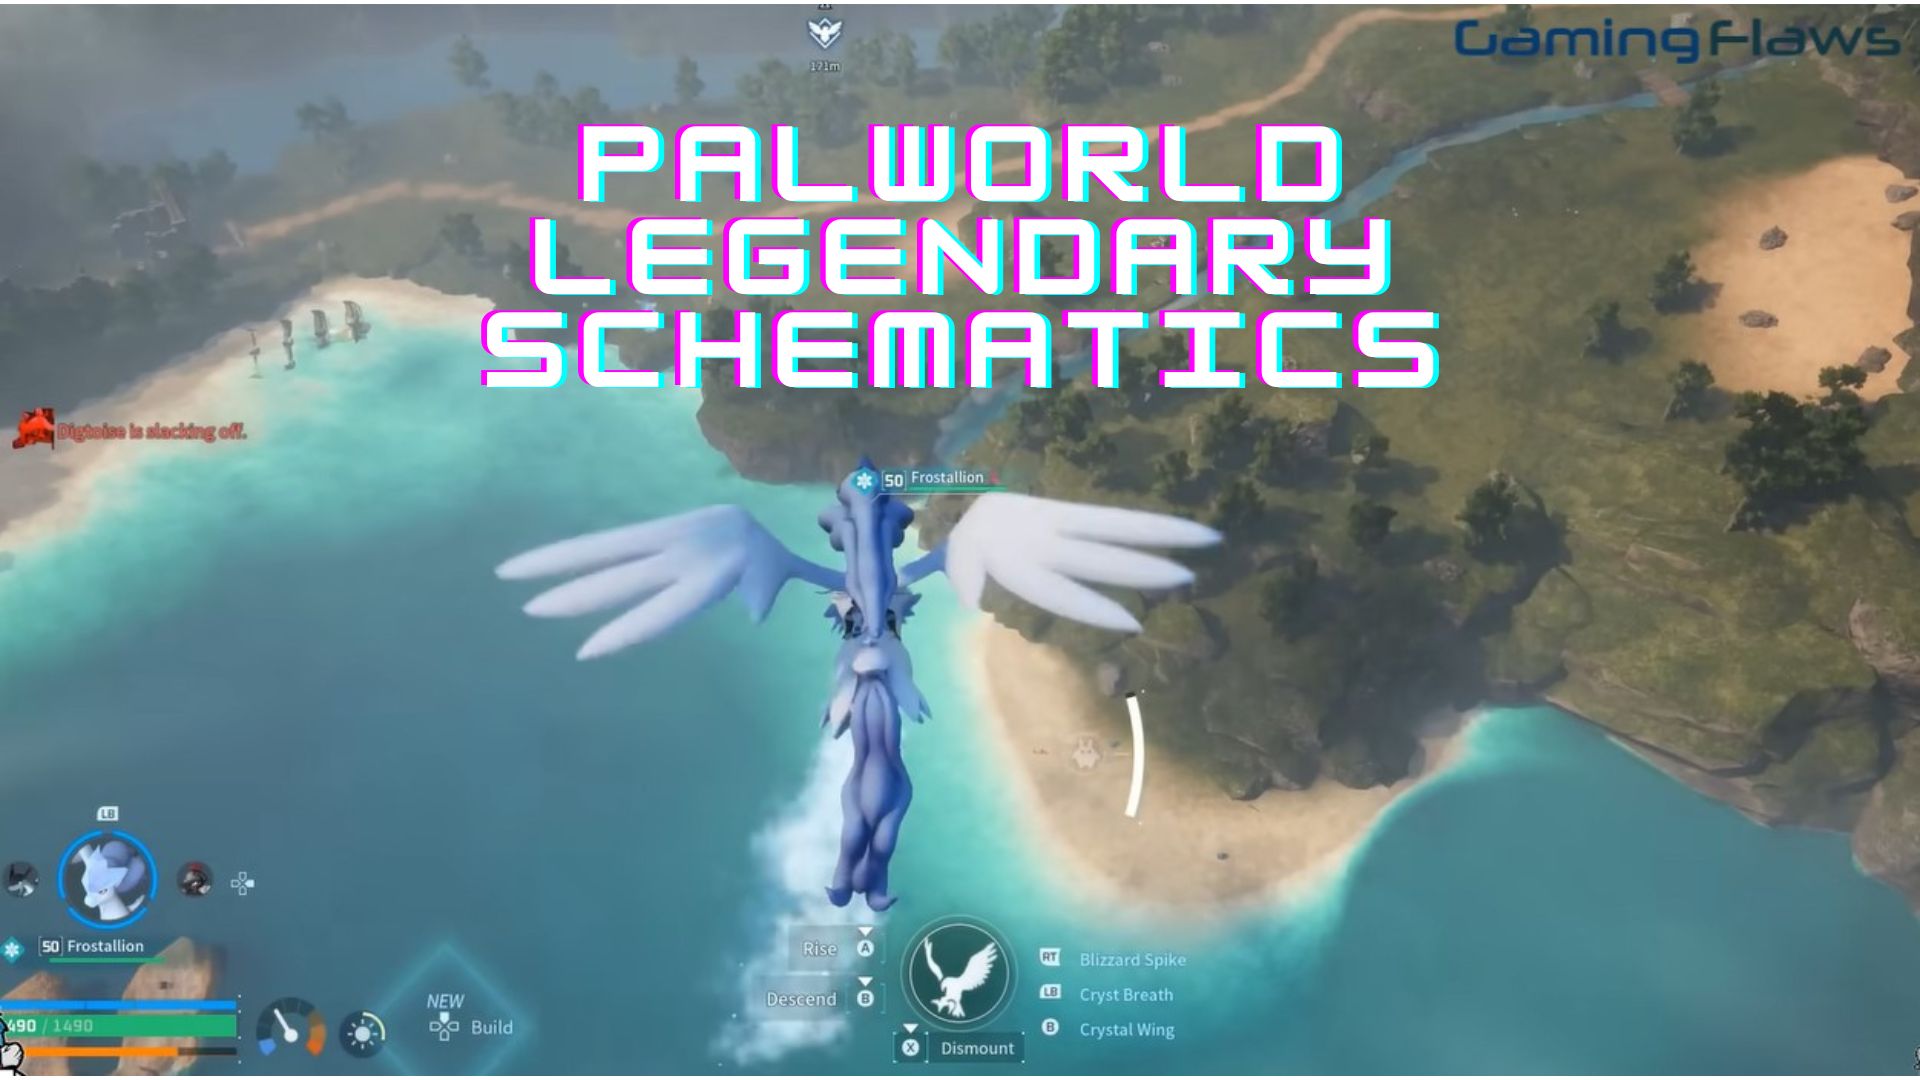 Palworld Legendary Schematics: A Complete Guide